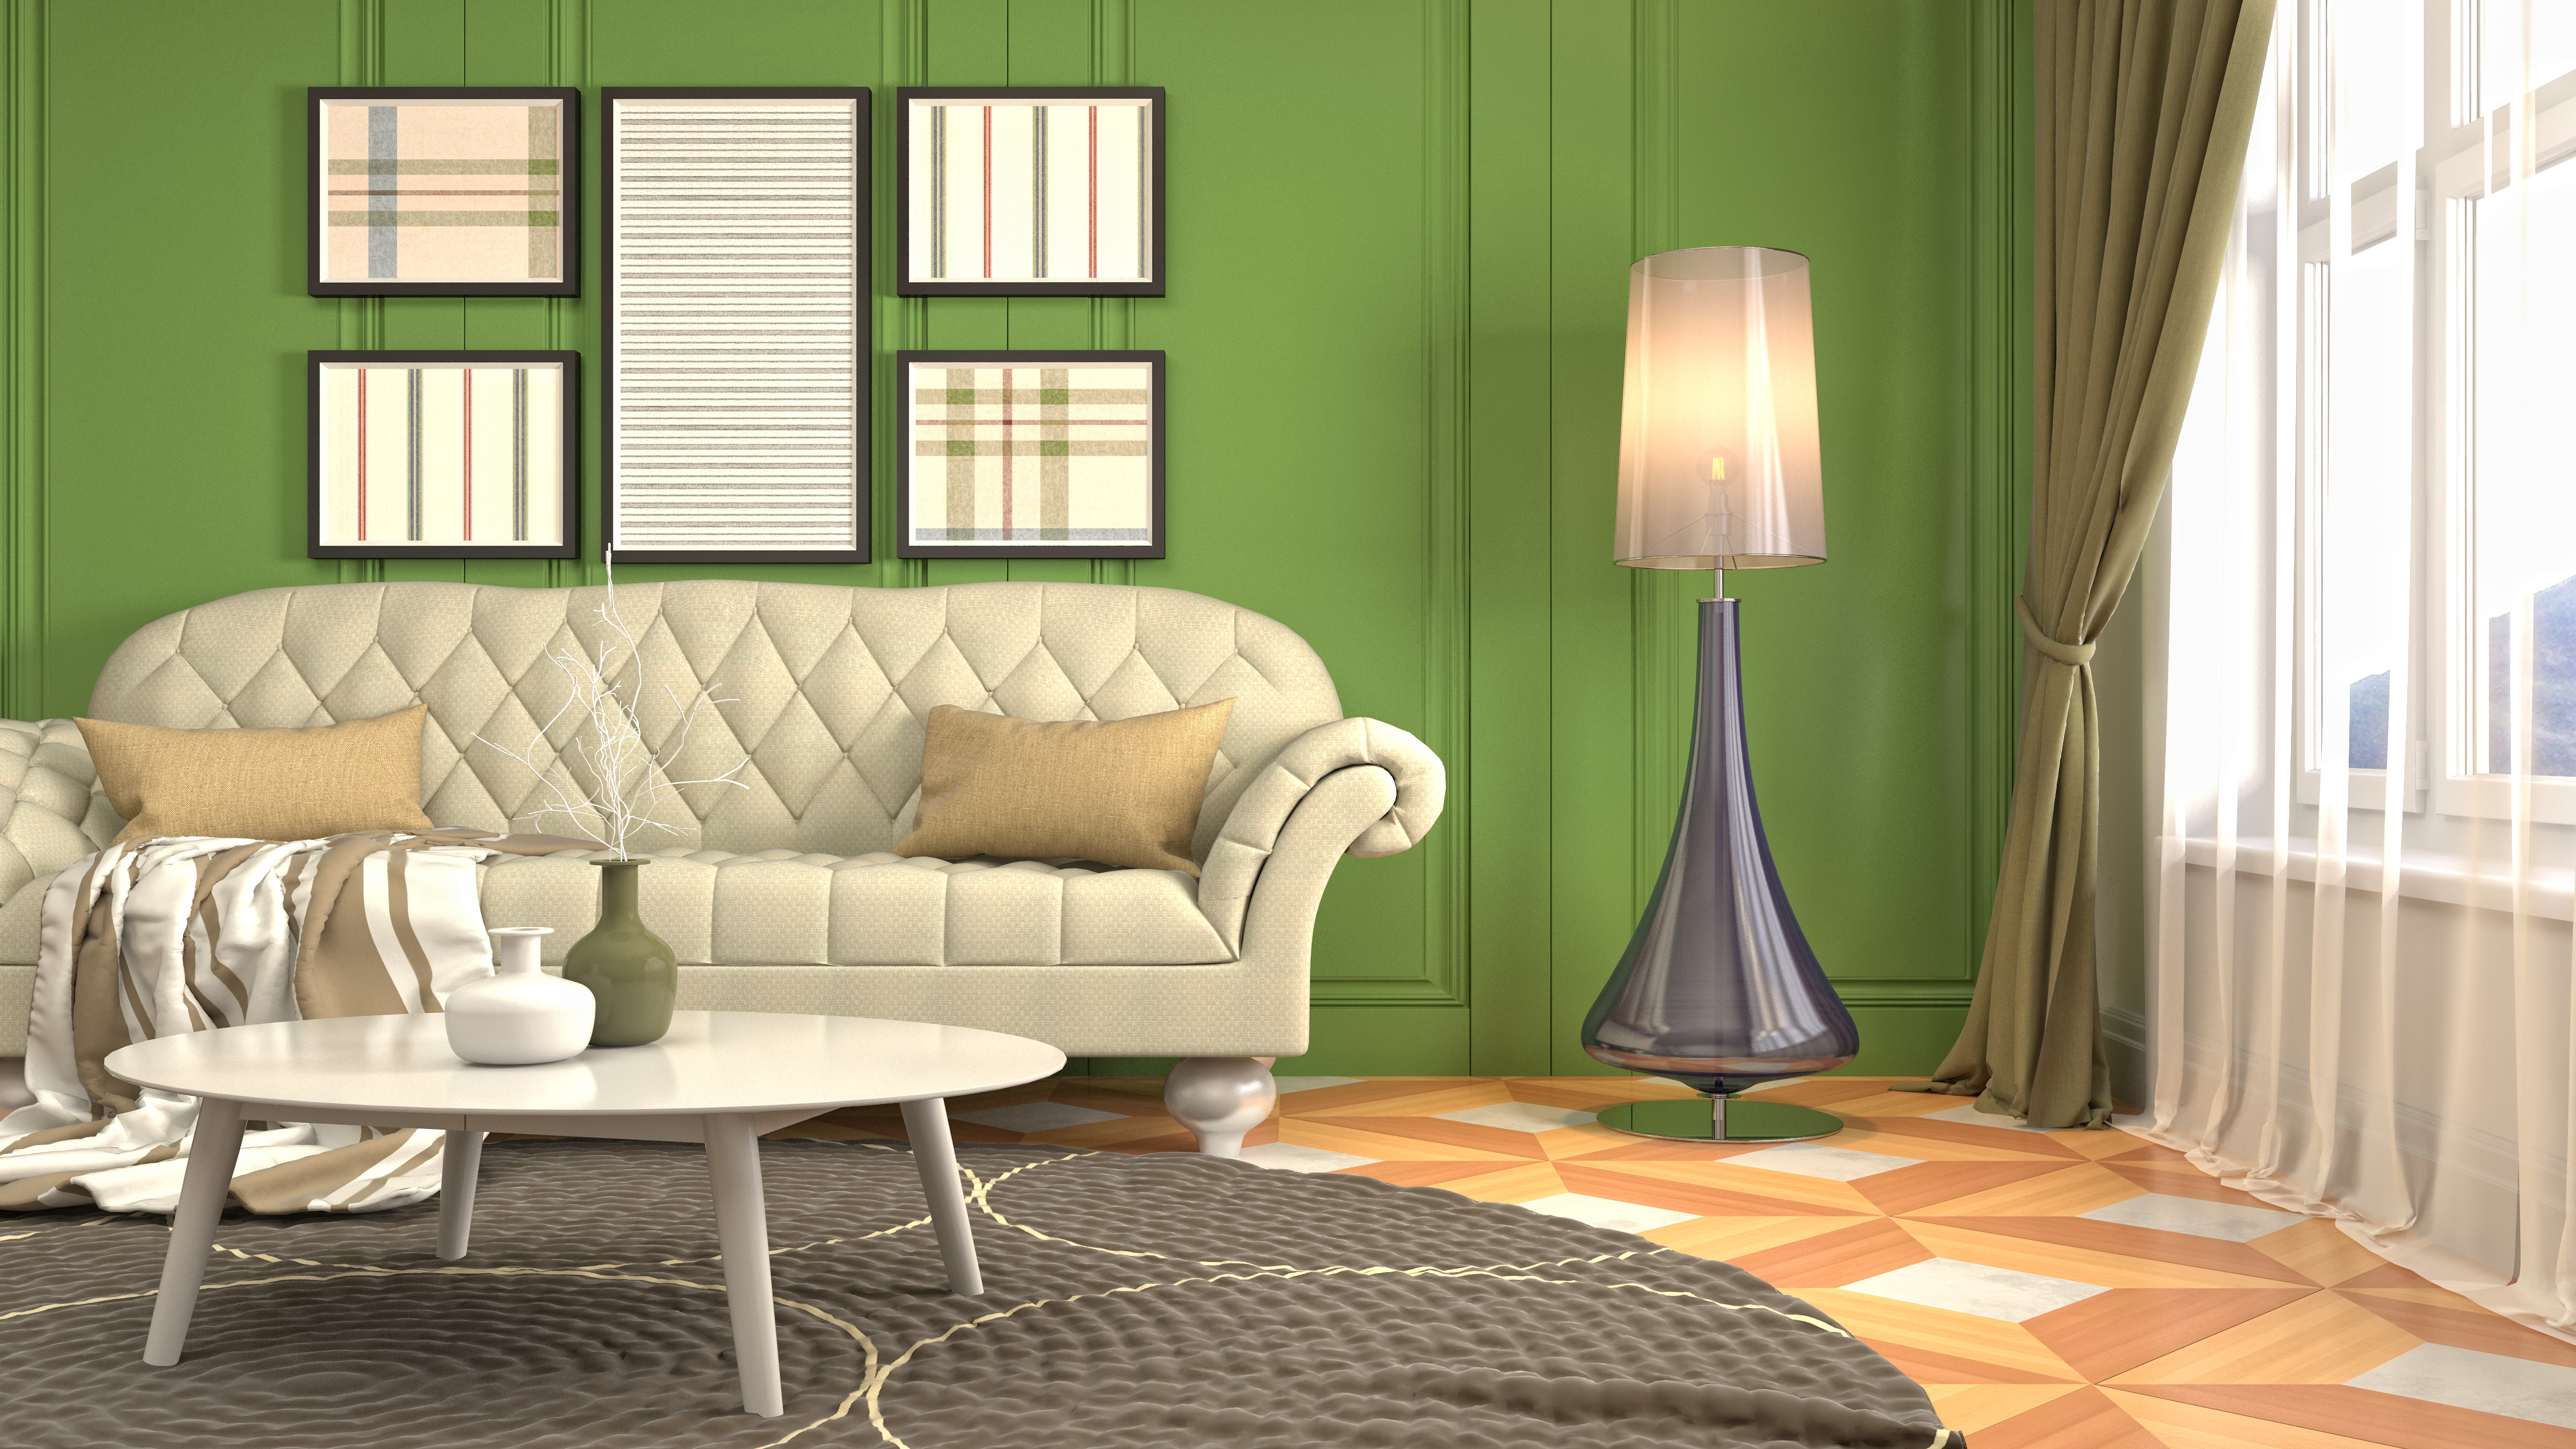 chesterfield sofa designs